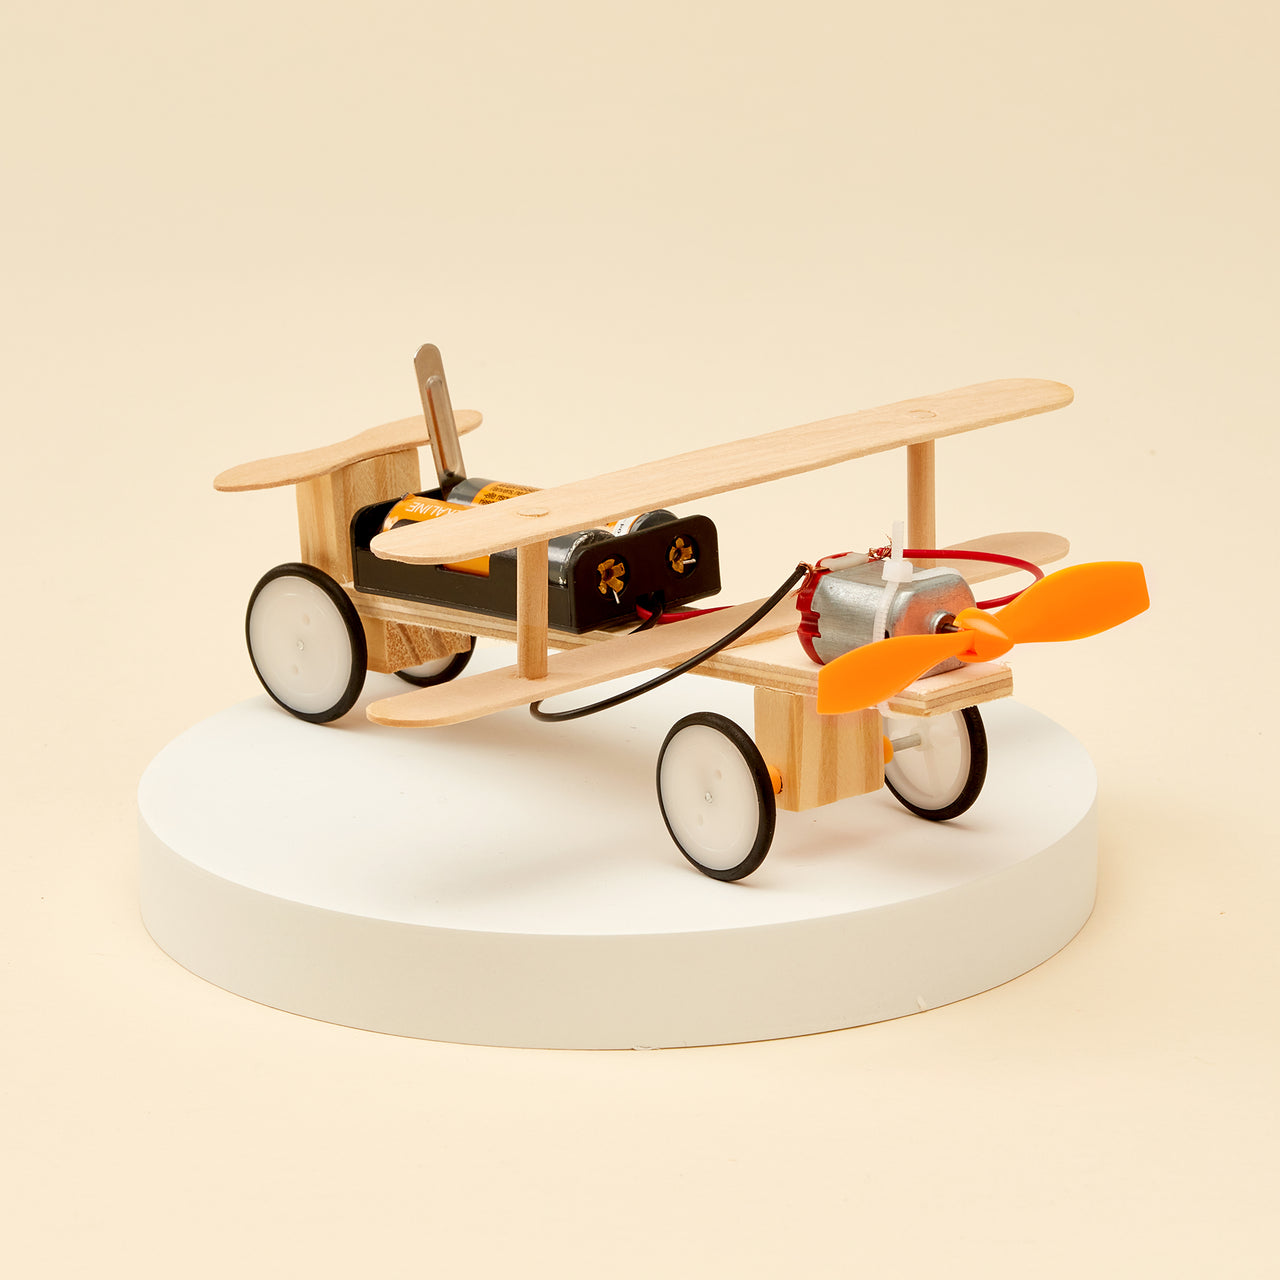 CreateKit Propeller Plane DIY Kit